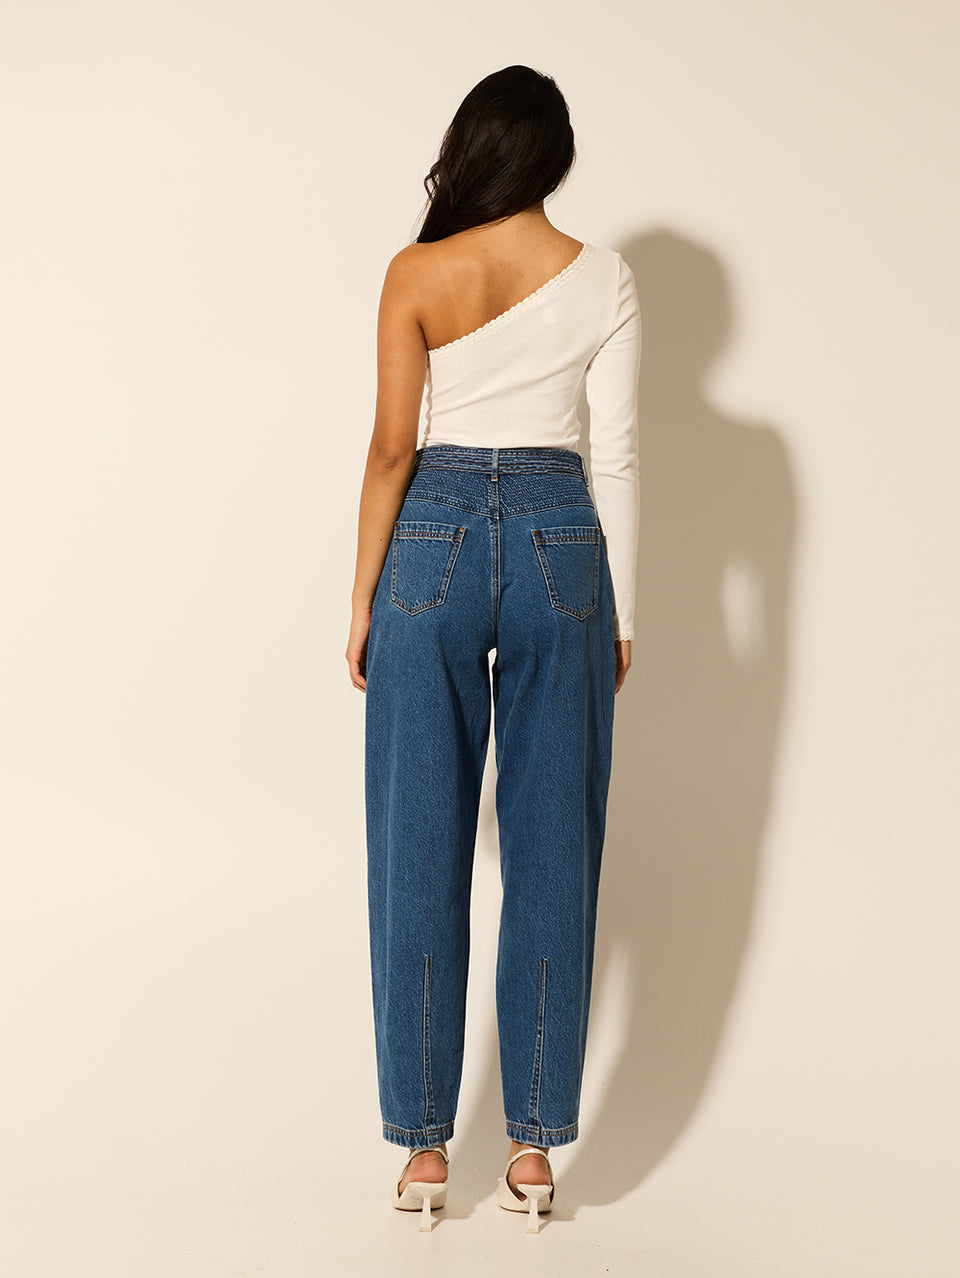 Adina Jean KIVARI | Model wears blue denim jean back view